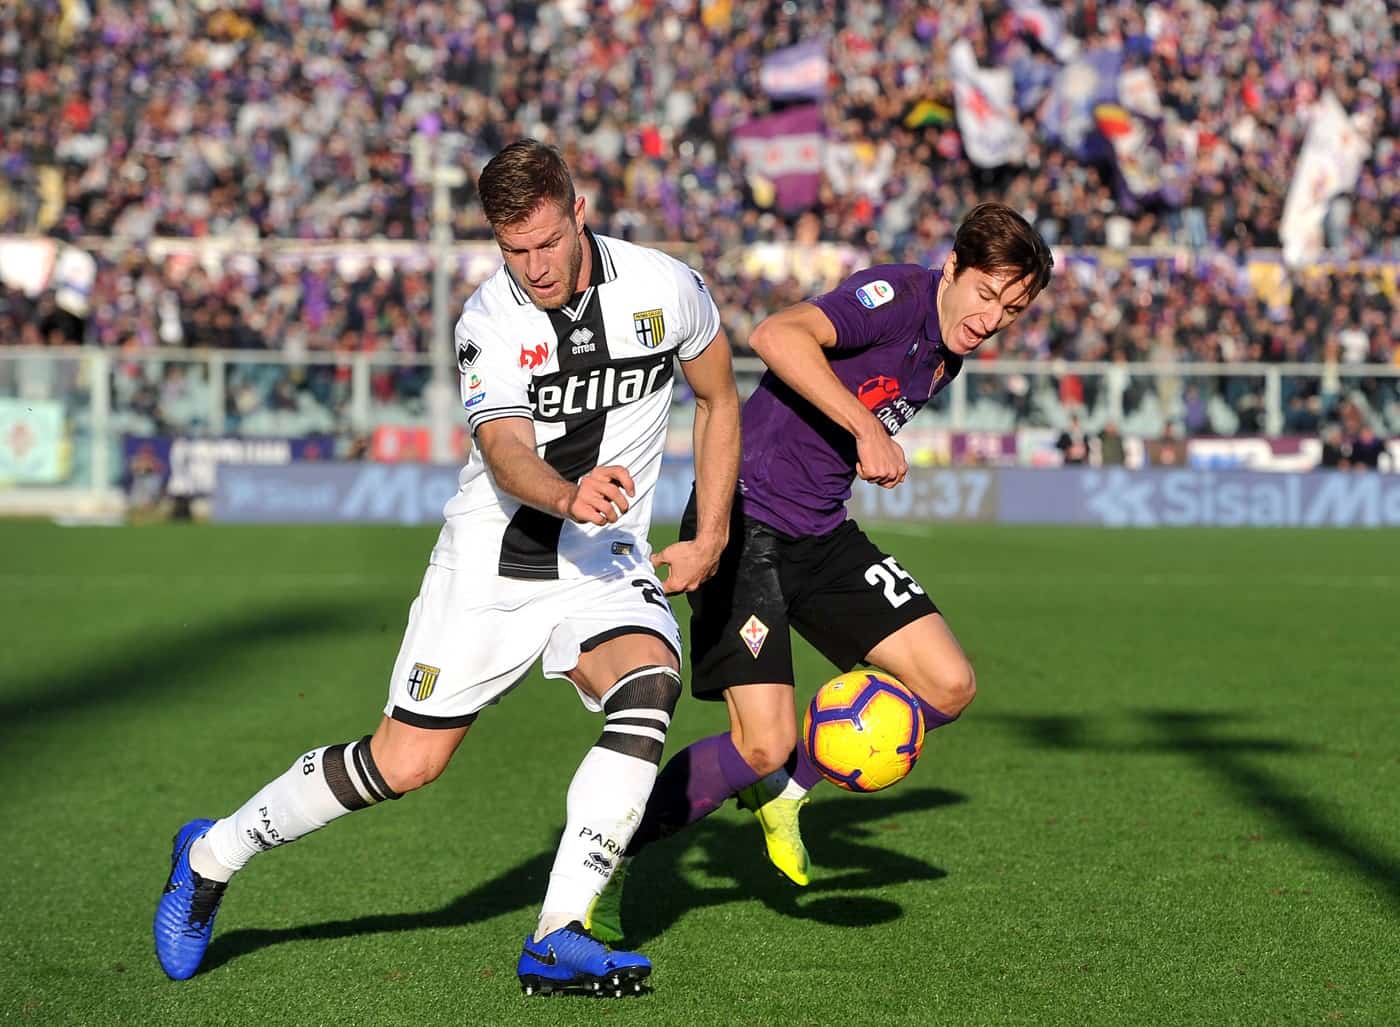 Fiorentina vs Parma Preview, Tips and Odds - Sportingpedia - Latest